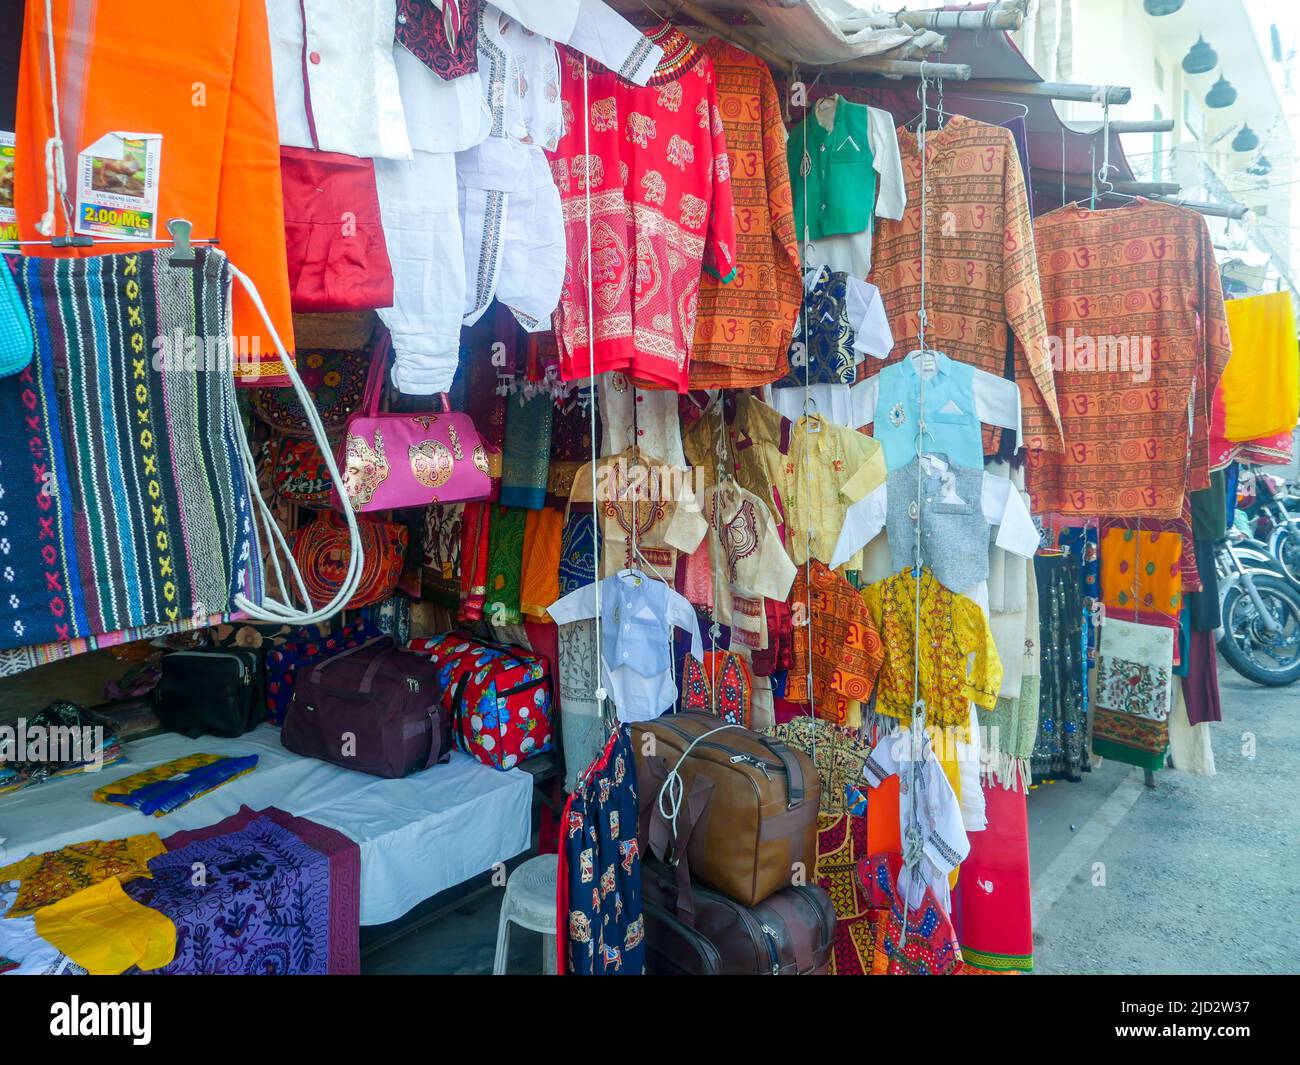 Pushkar, Rajasthan India - November 4, 2019 : local street market selling cloths, t-shirts, dress and garments, menswear hanging in shop. Stock Photo